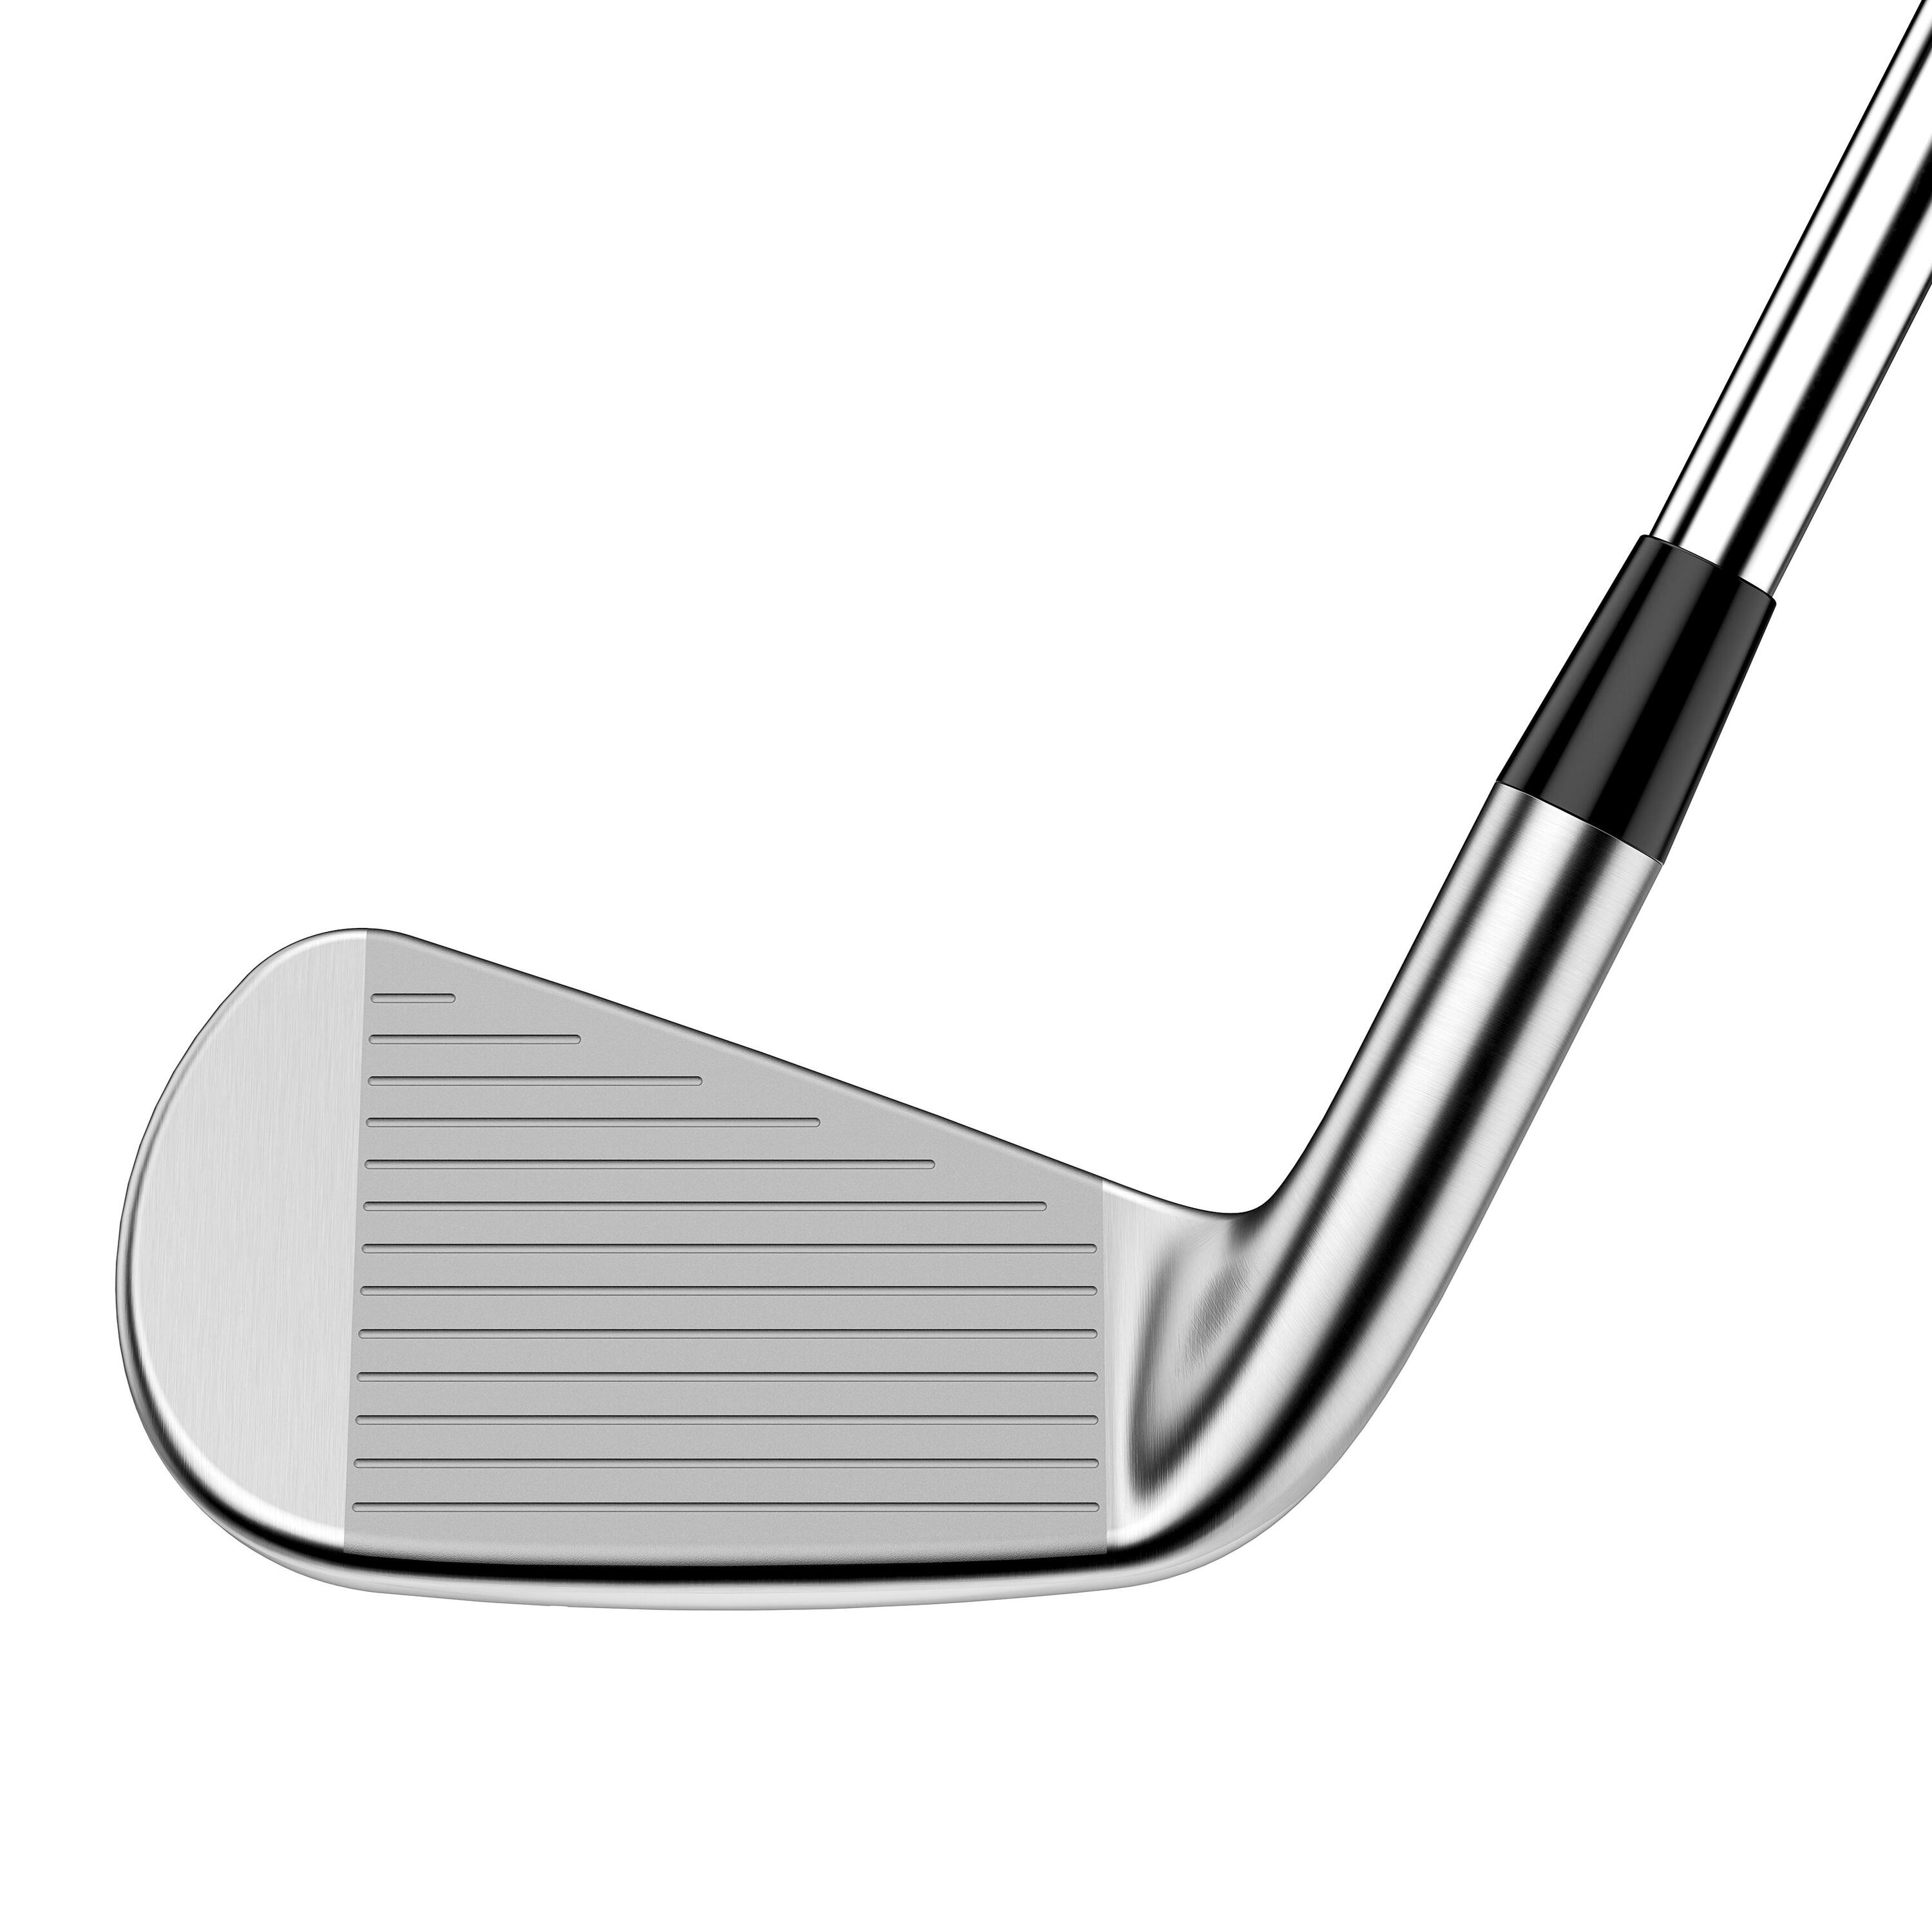 Set of right-handed regular golf irons - TITLEIST T-200II 4/4